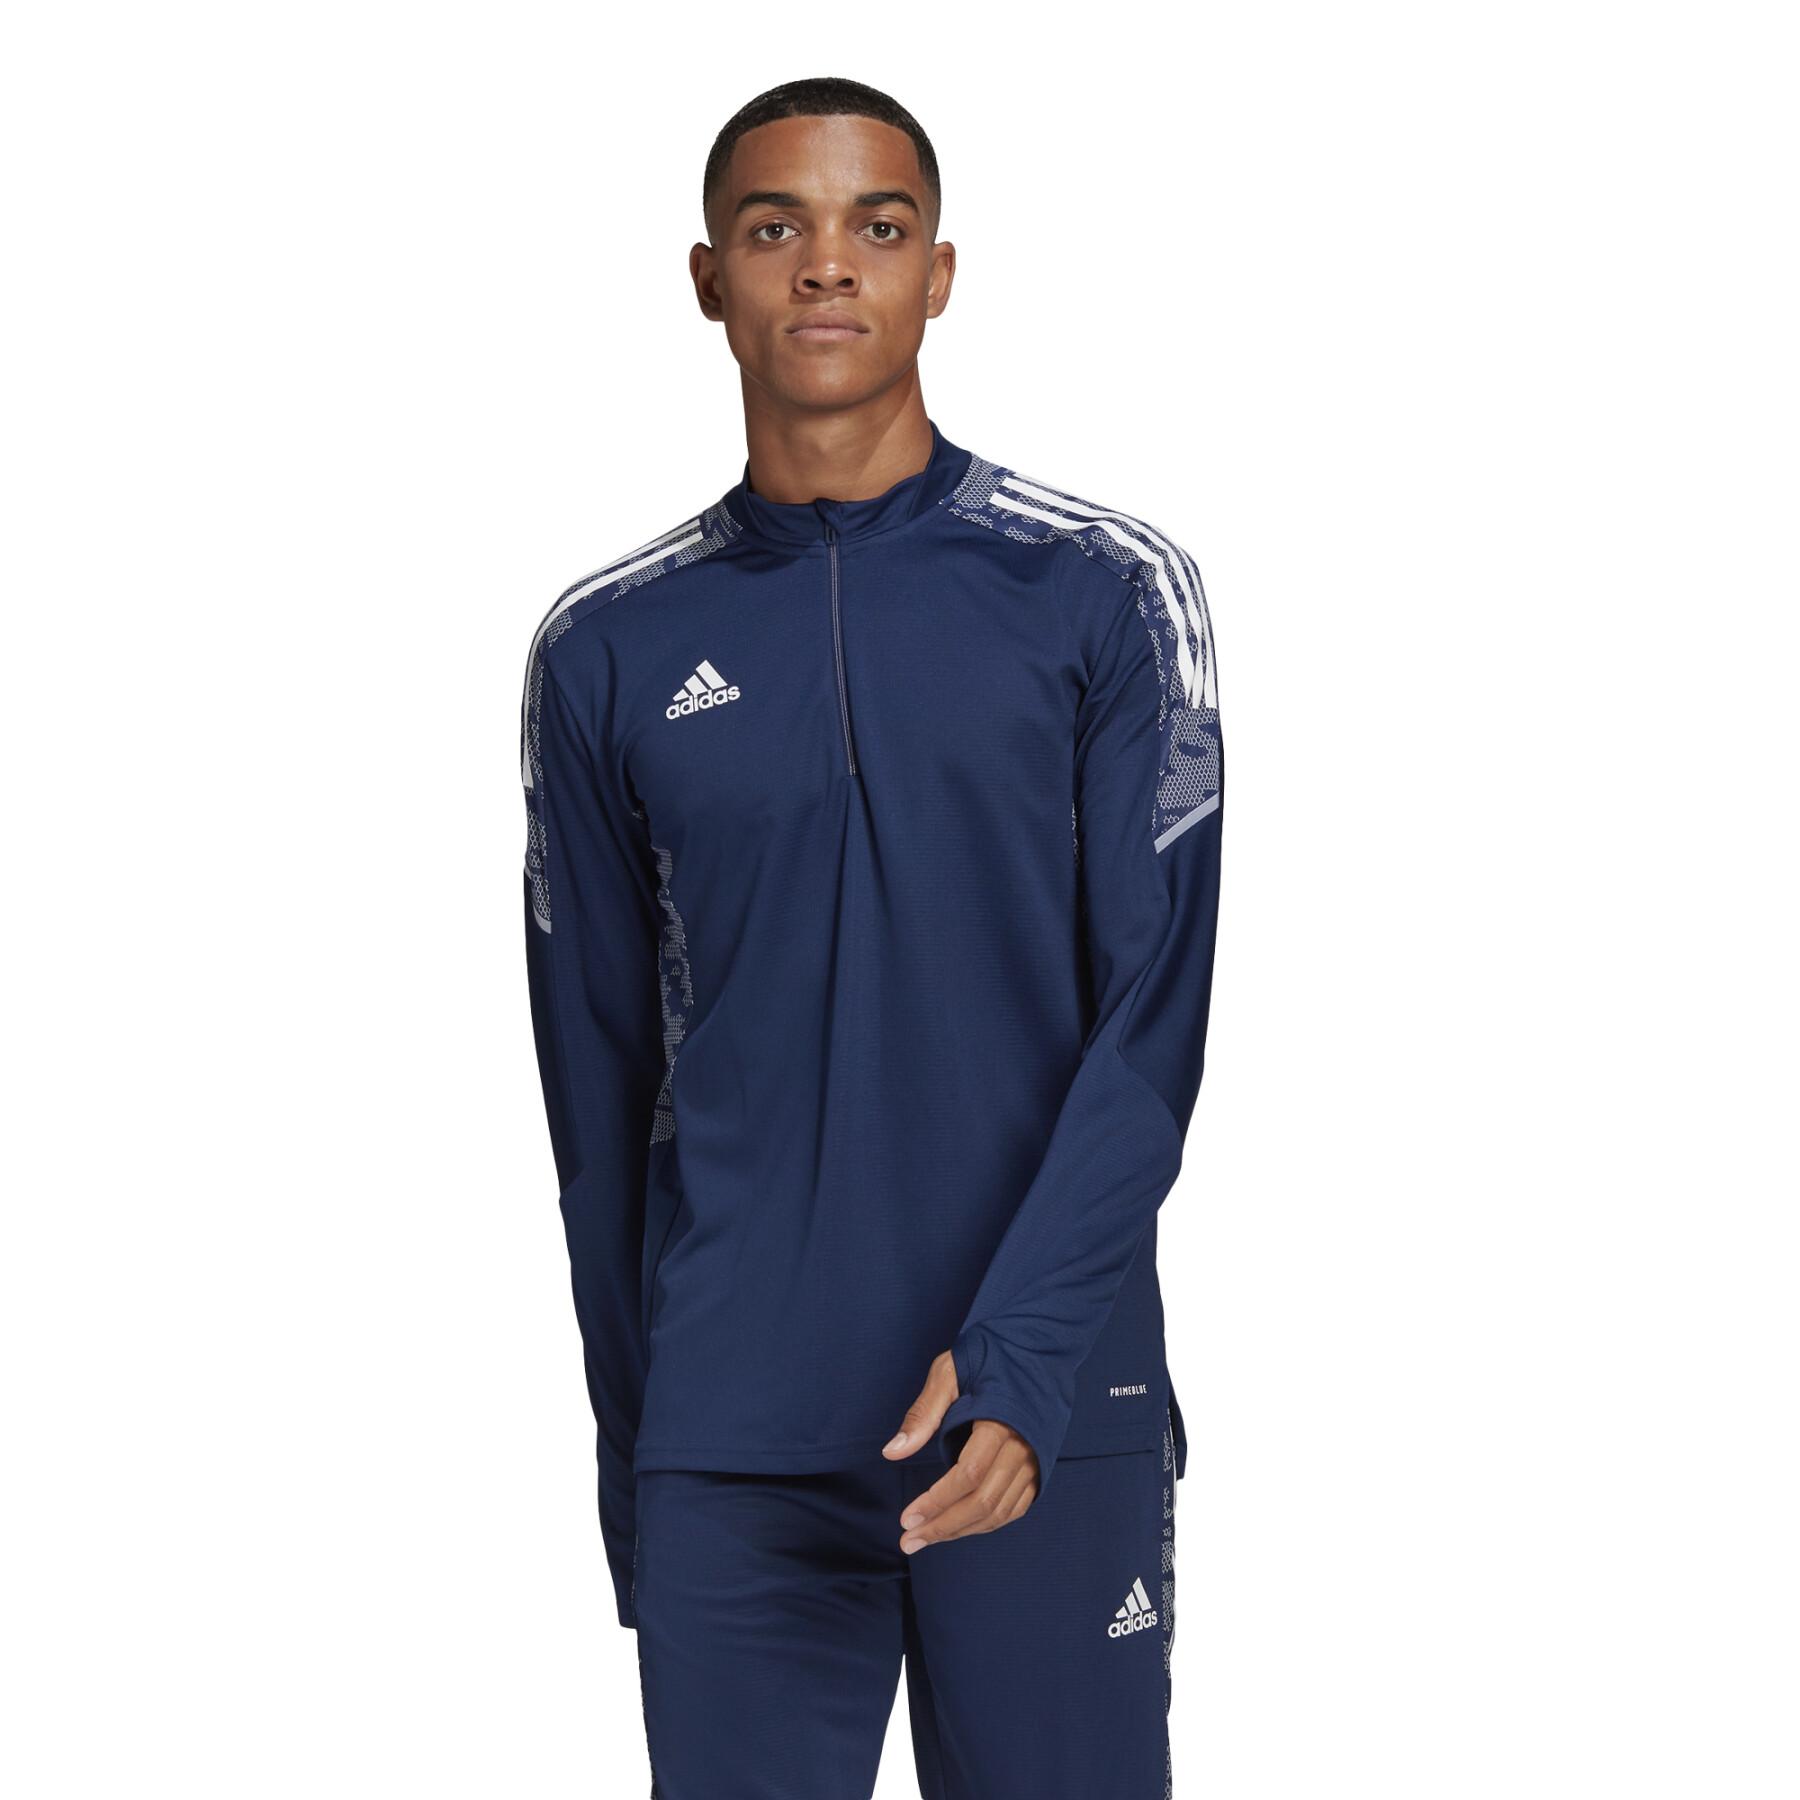 Training jacket adidas Primeblue - Jackets and Windcheaters - Teamwear - Football